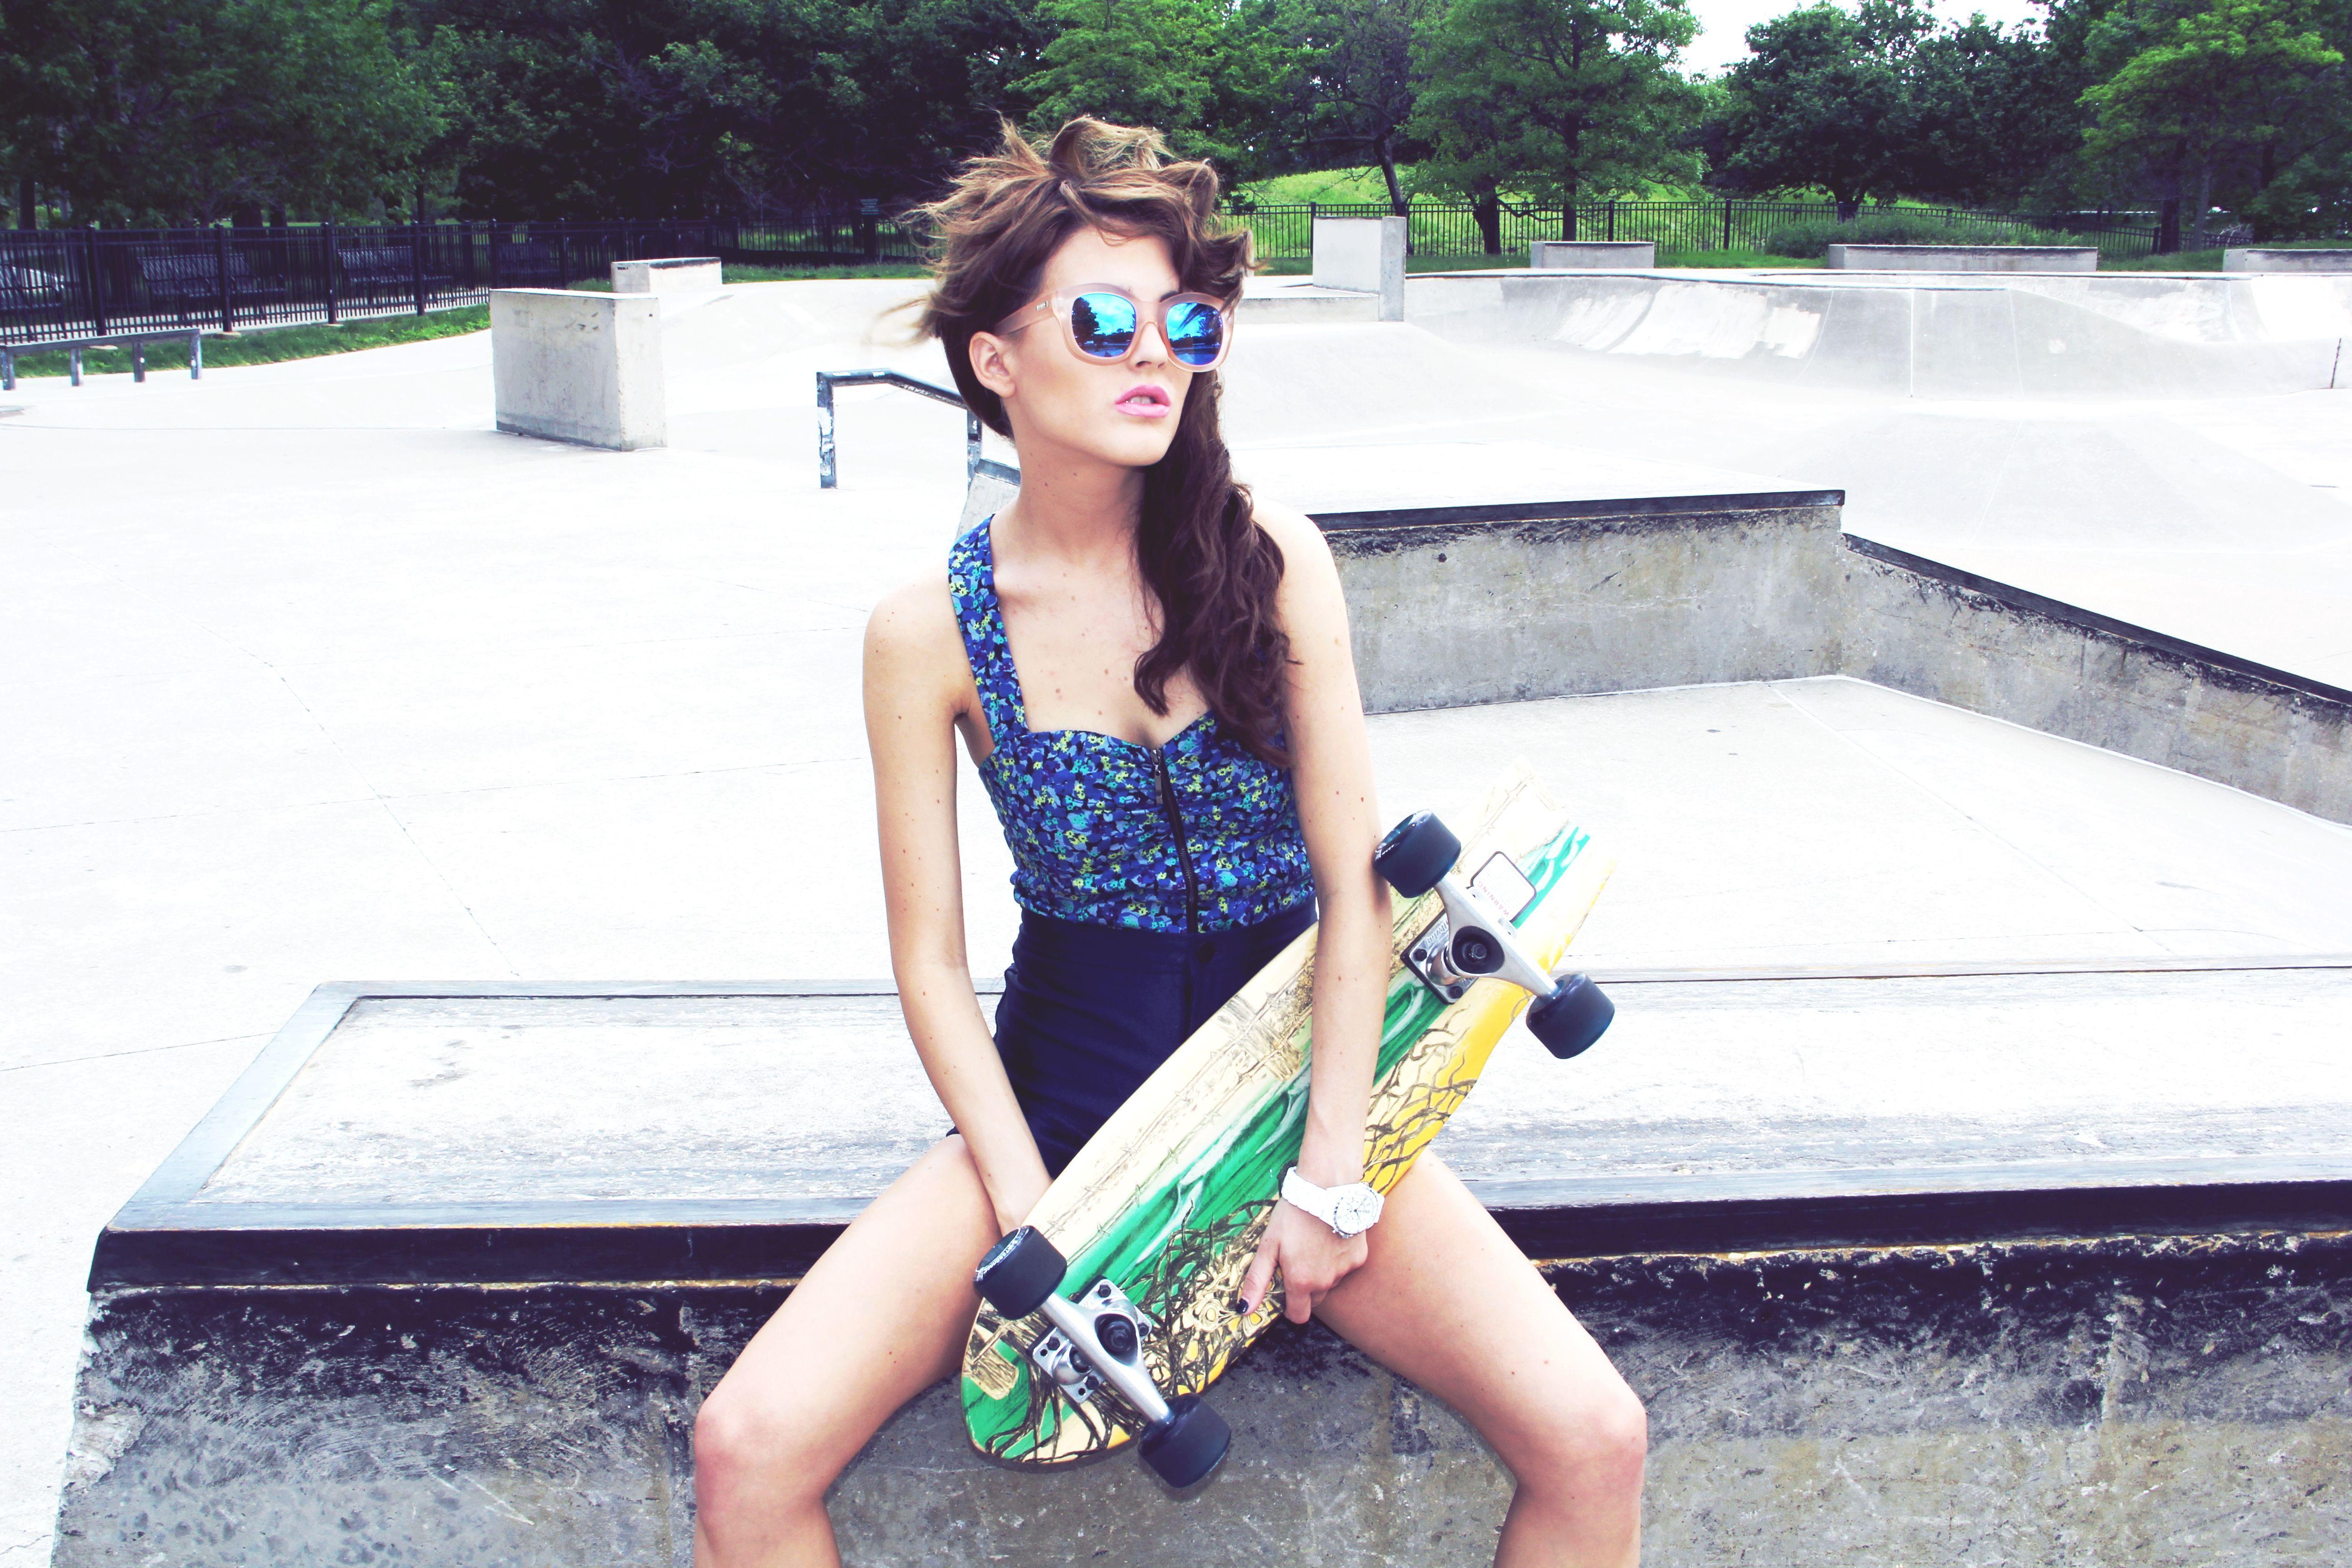 swag girl with skateboard